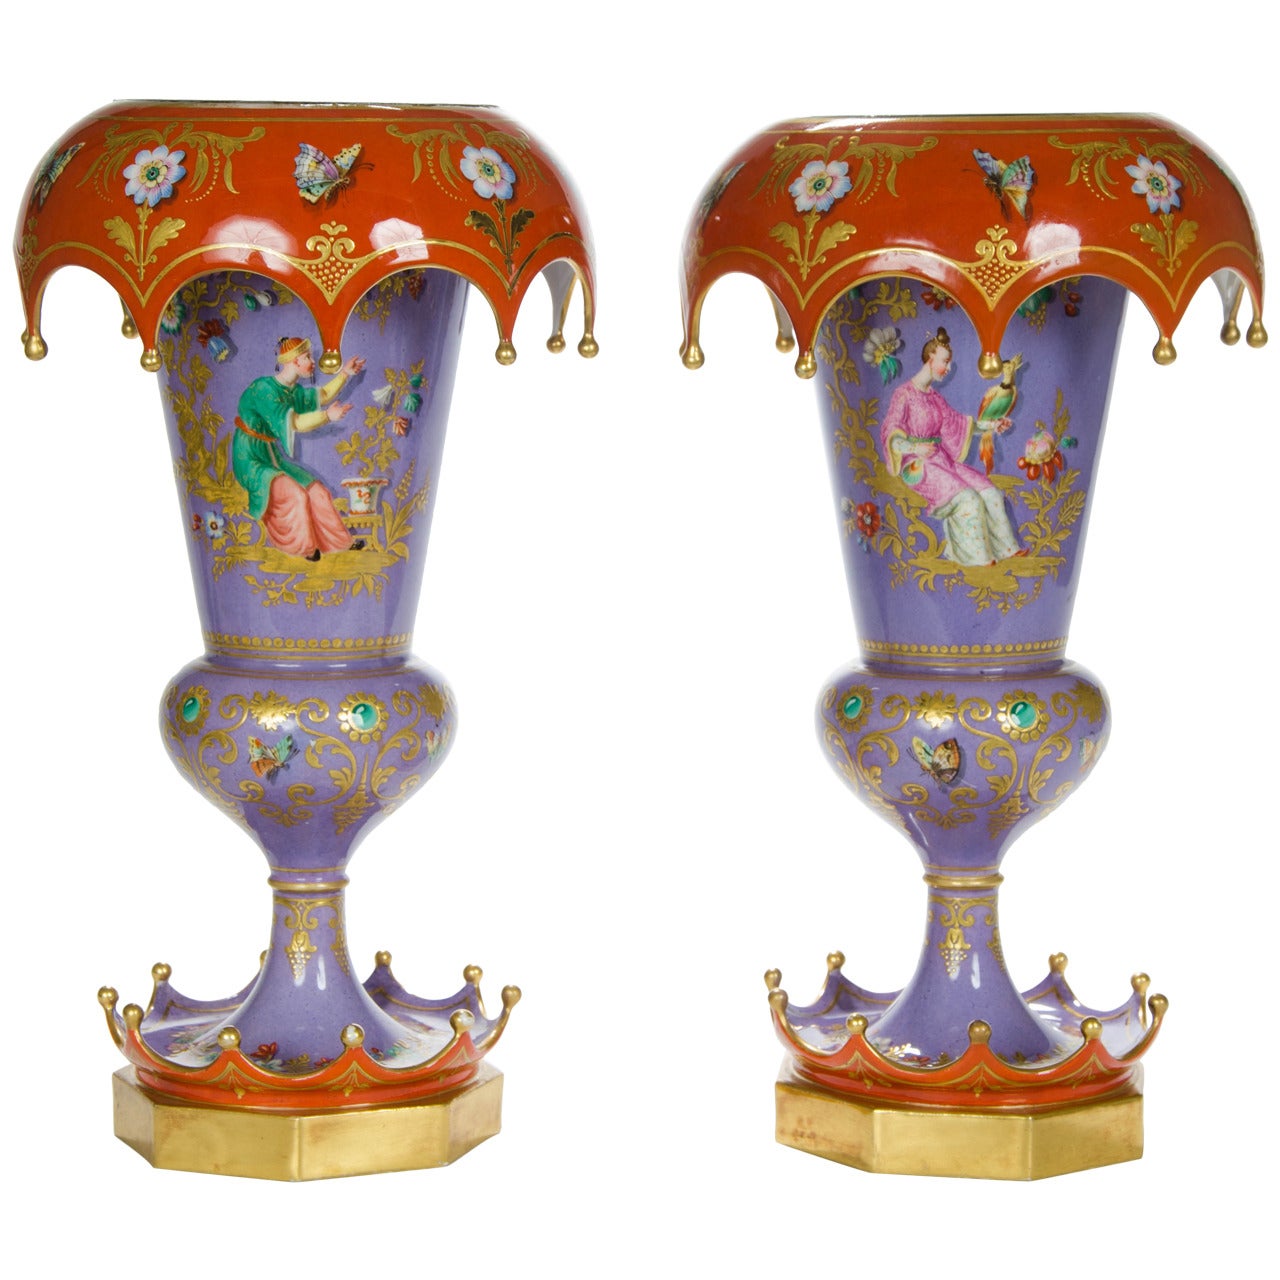 Rare Pair of Chinoiserie Vases, French, circa 1840